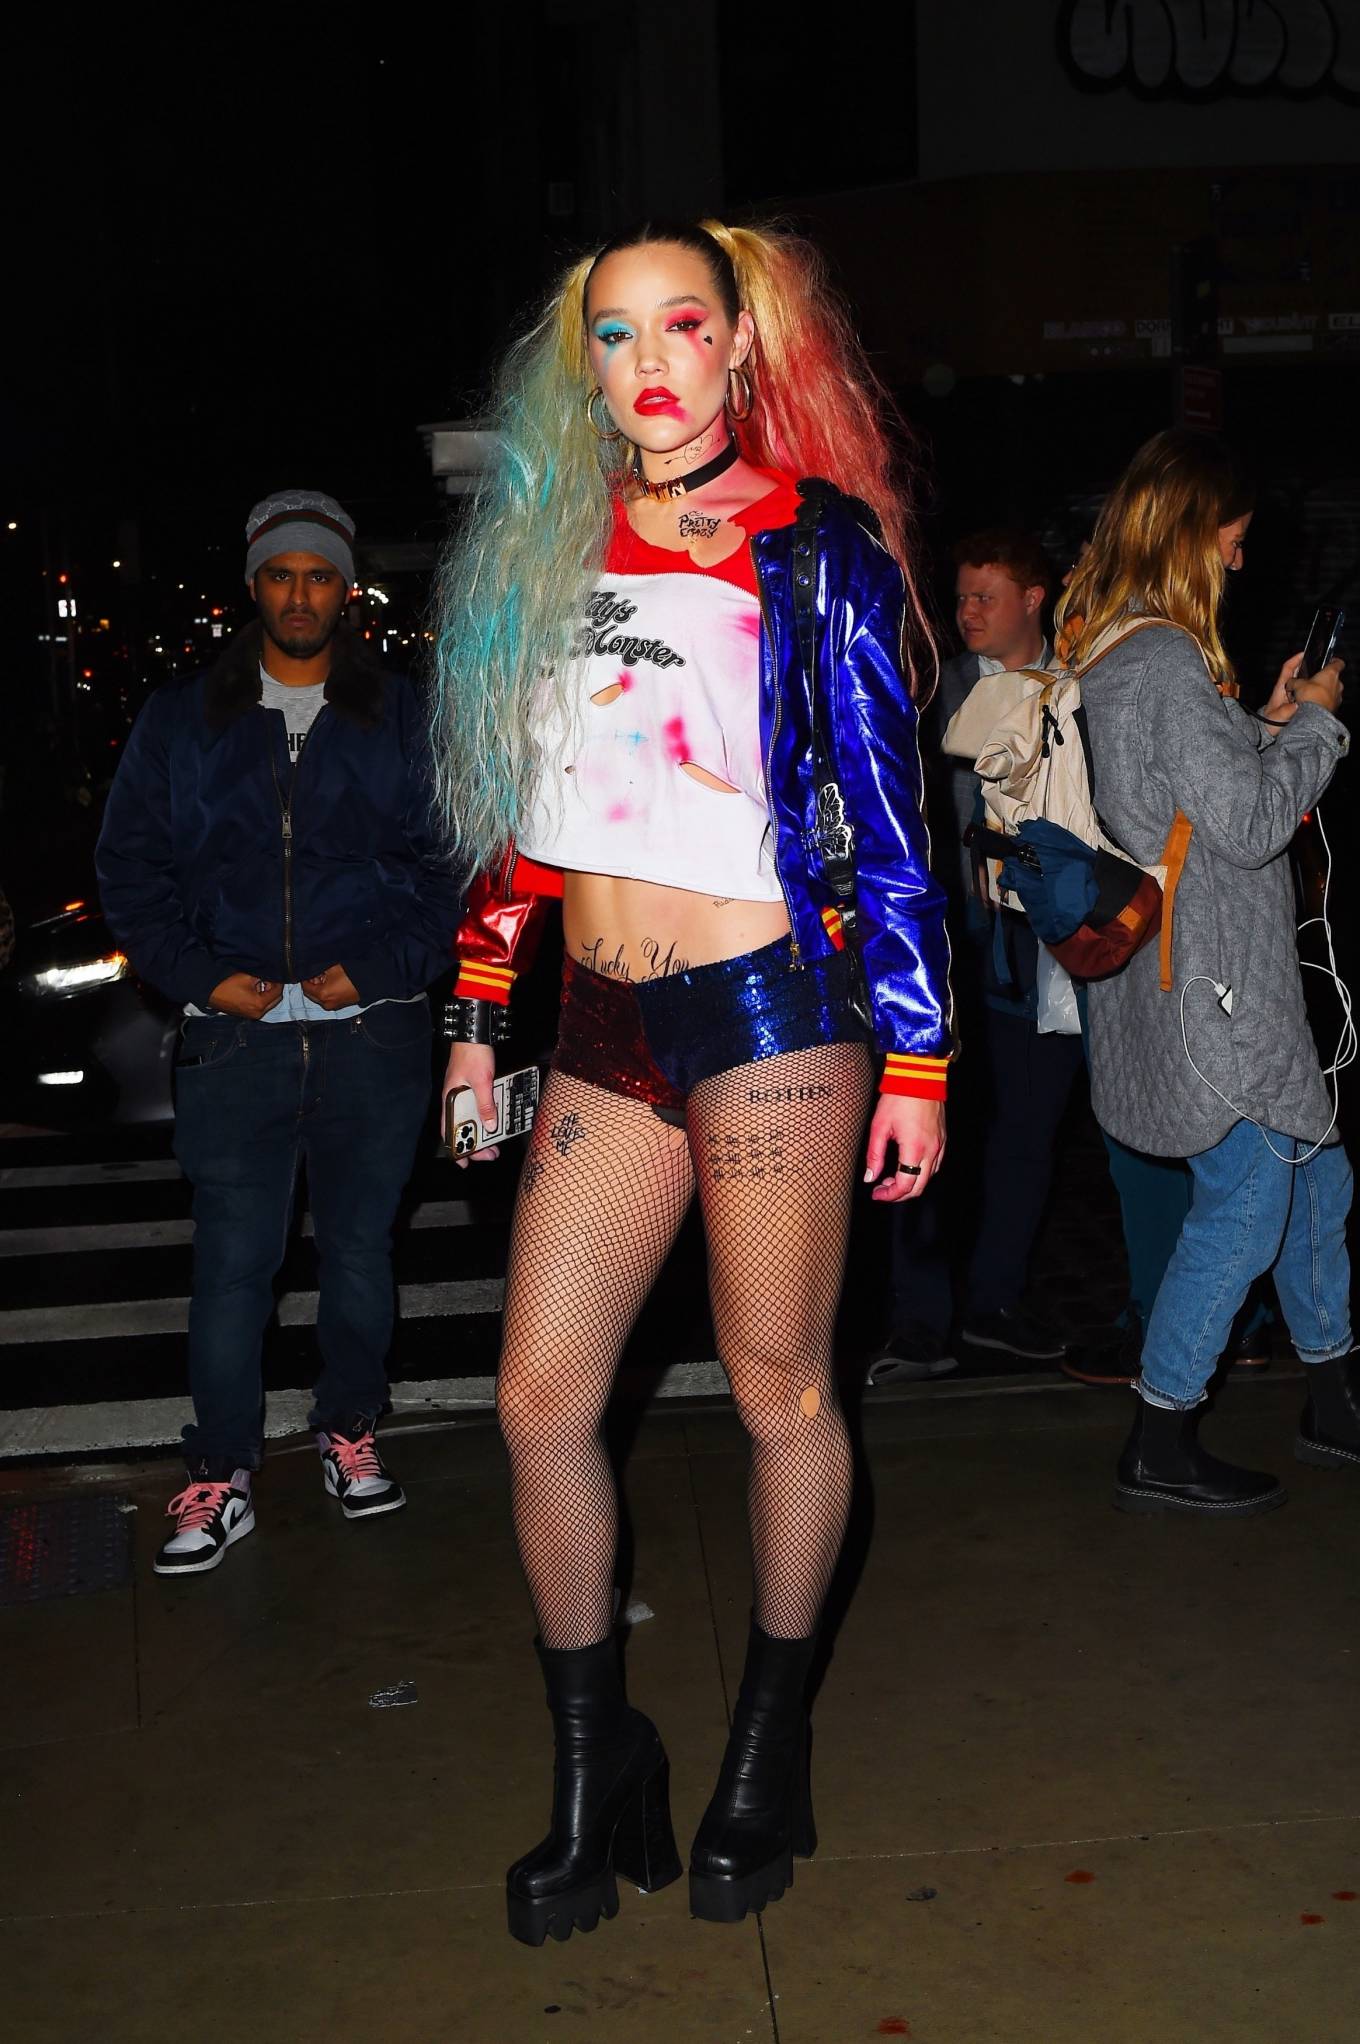 Olivia Ponton - Dresses as Harley Quinn for Heidi Klum's Halloween party in New York